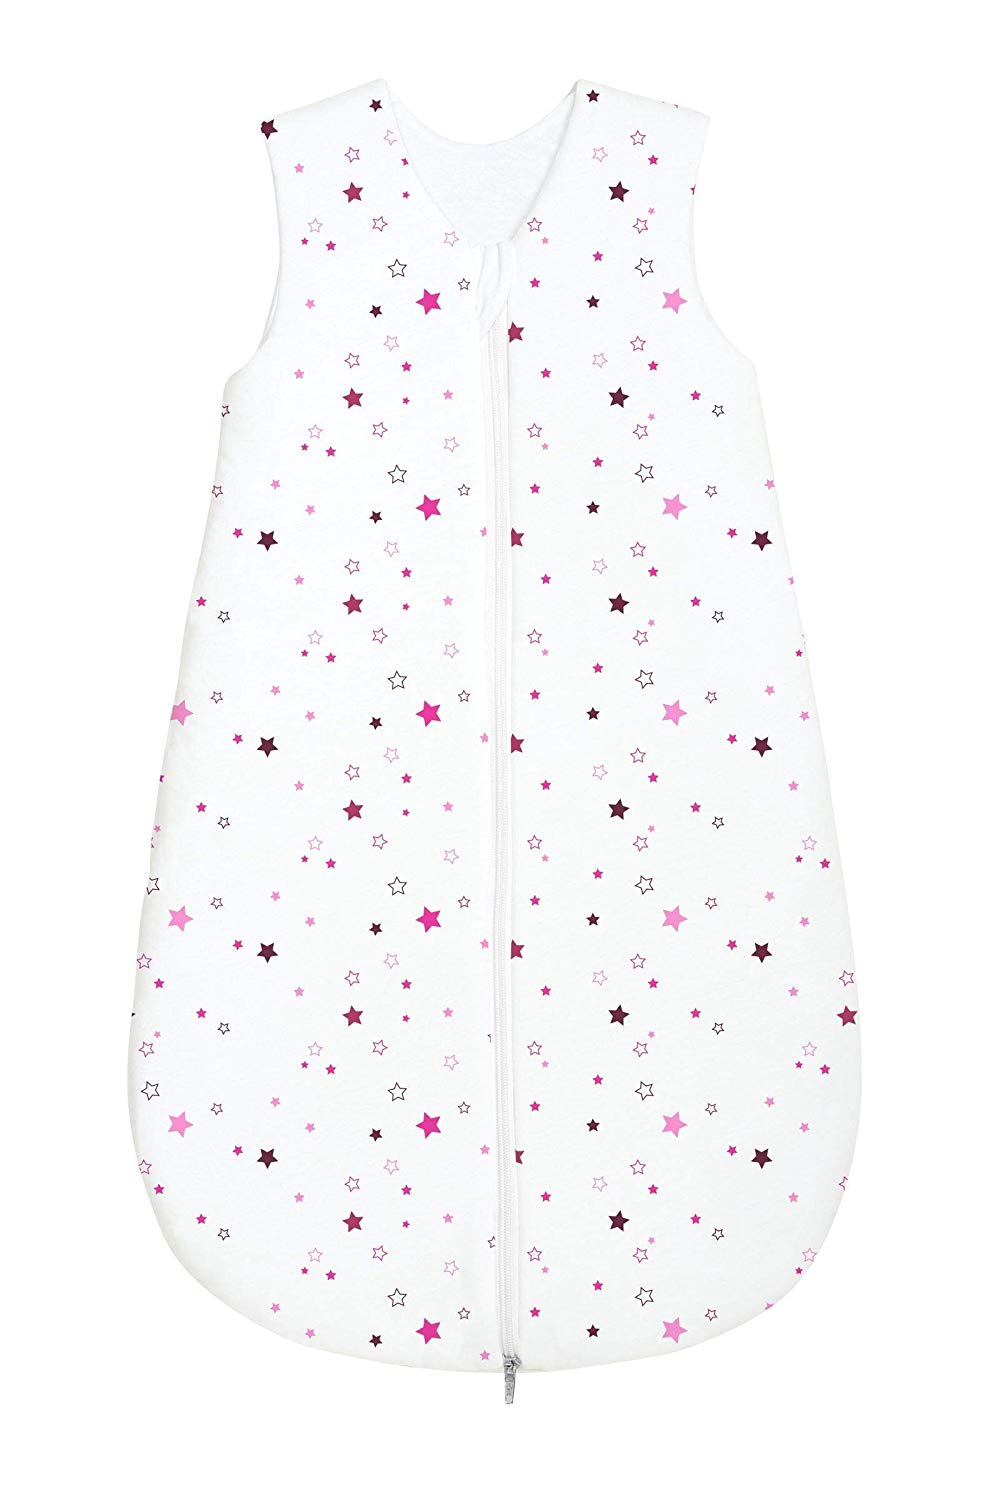 Odenwälder Jersey Summer Sleeping Bag Stars Pink and Blackberry, 110 cm